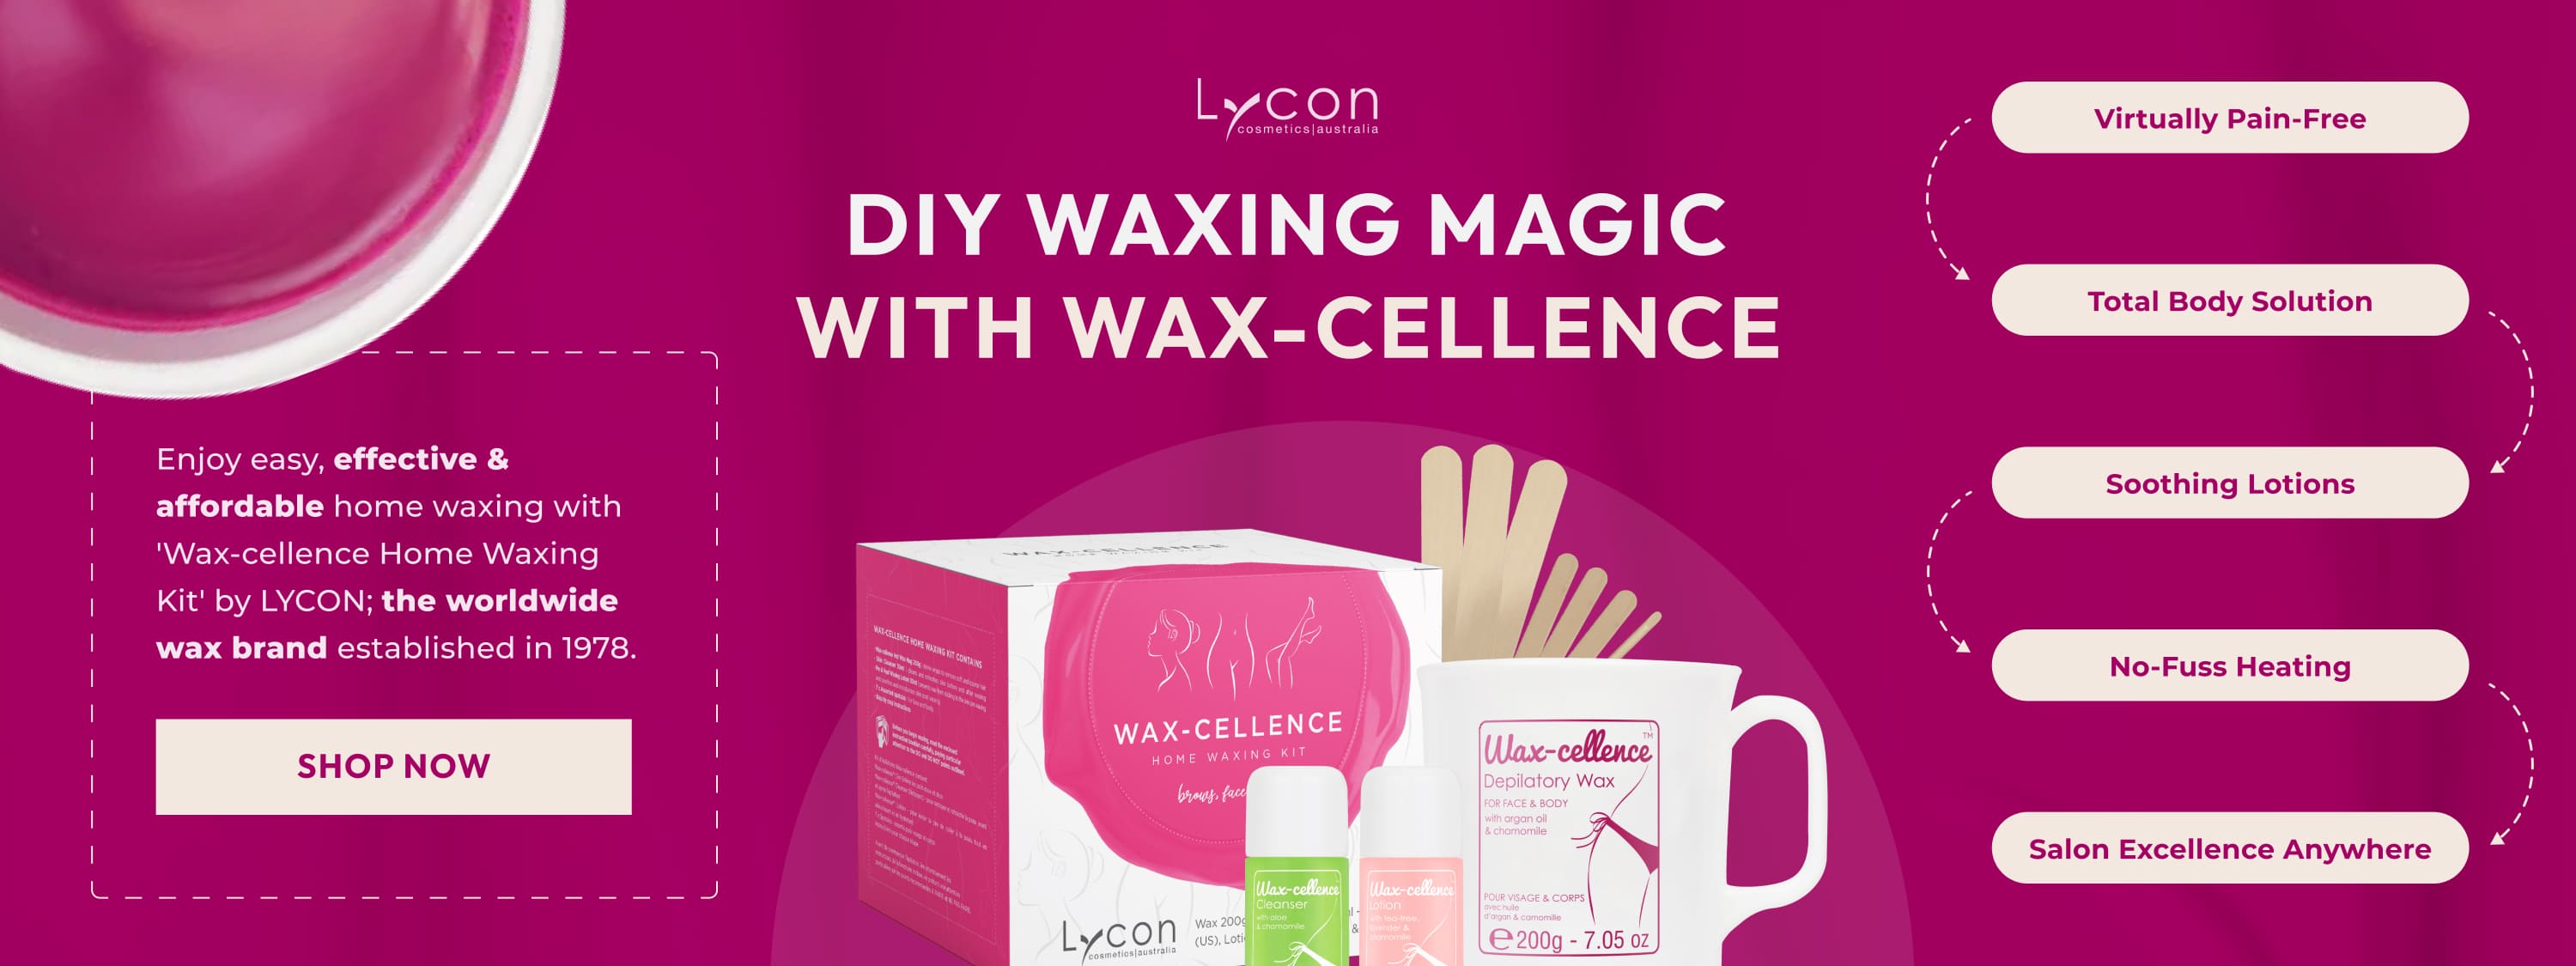 LYCON Wax-cellence Kit